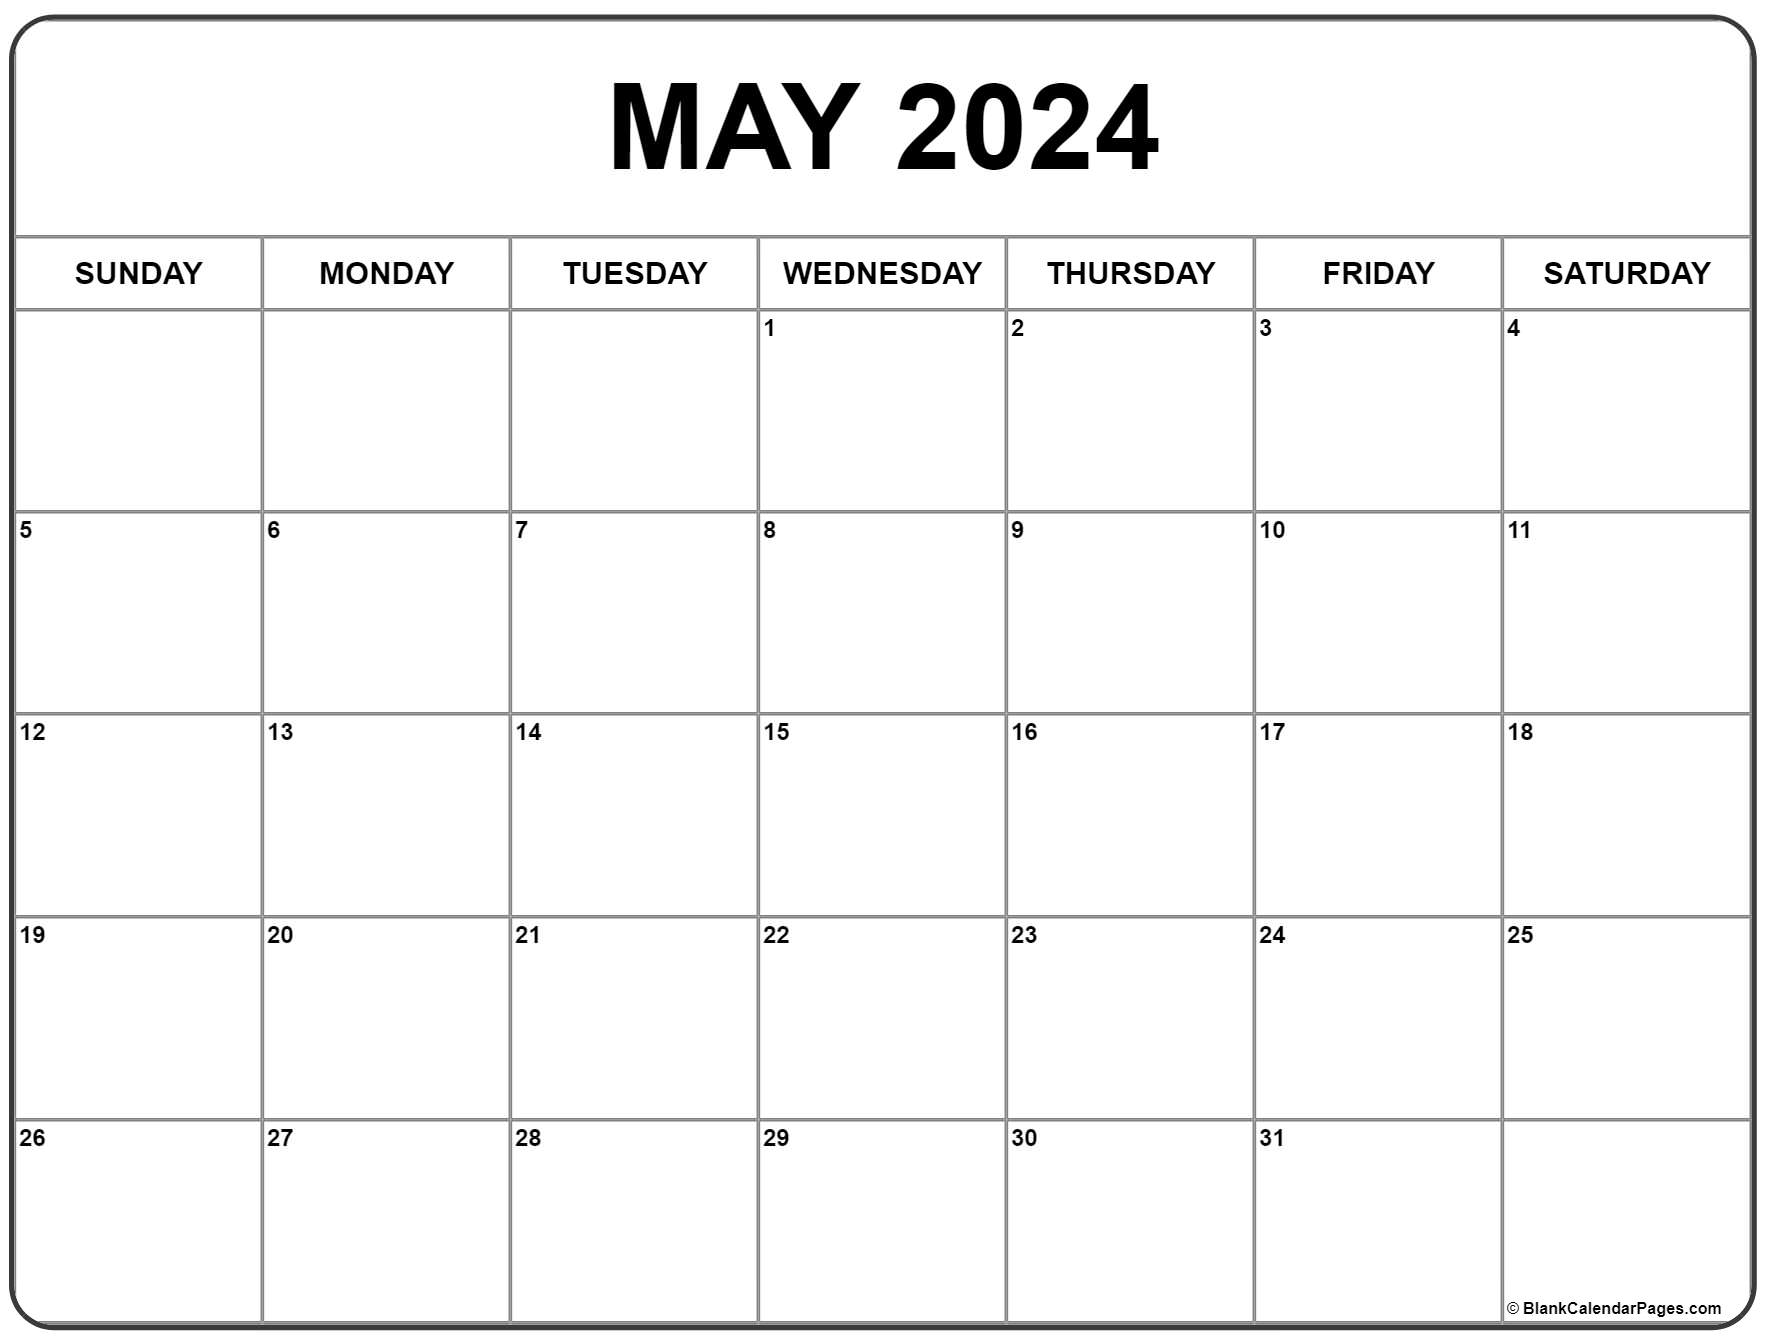 May 2024 Calendar | Free Printable Calendar for Printable Free May Calendar 2024